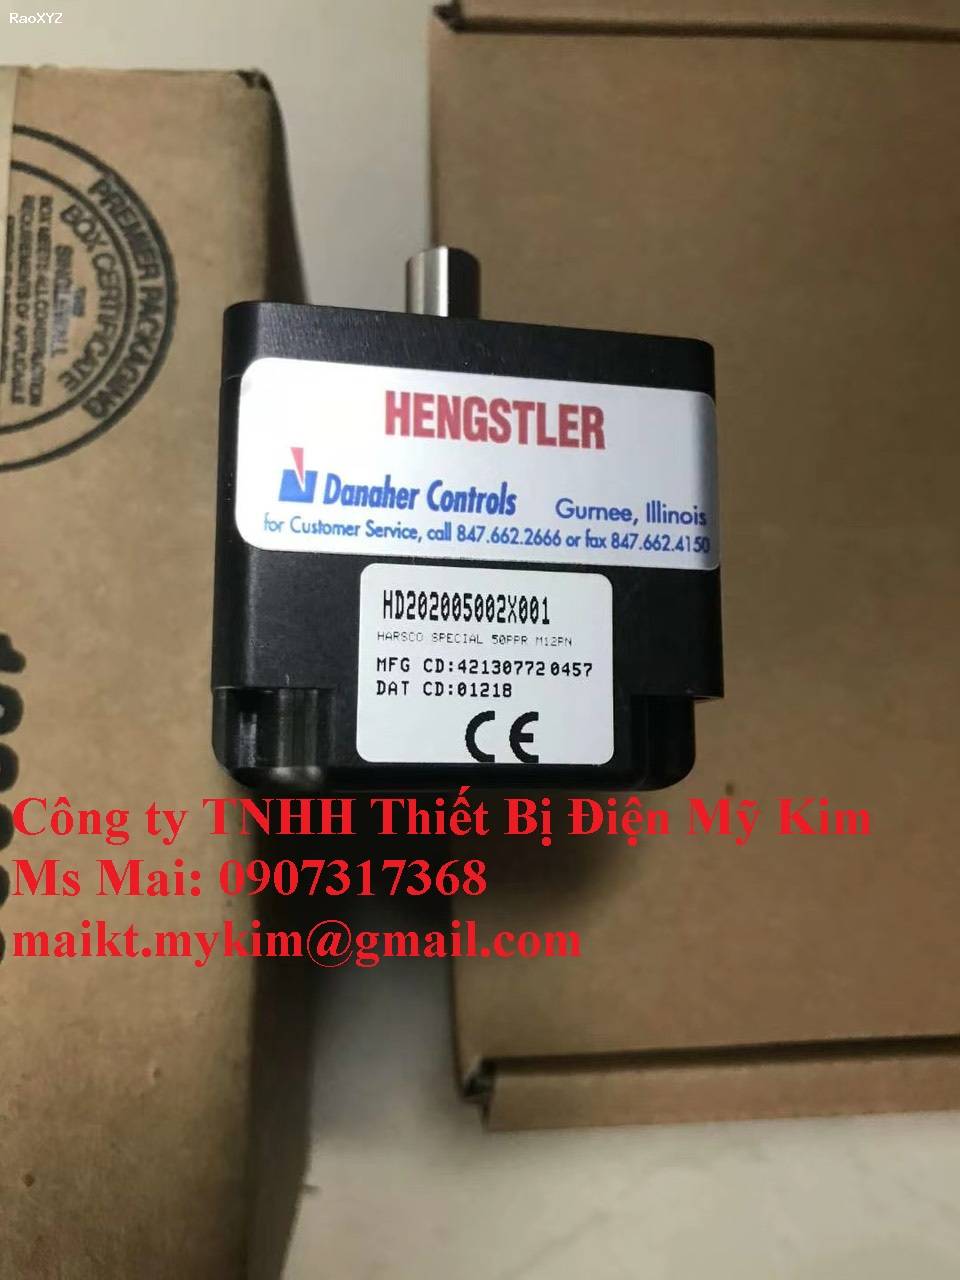 HENGSTLER HD202005002X001 - Thietbidienmykim.com